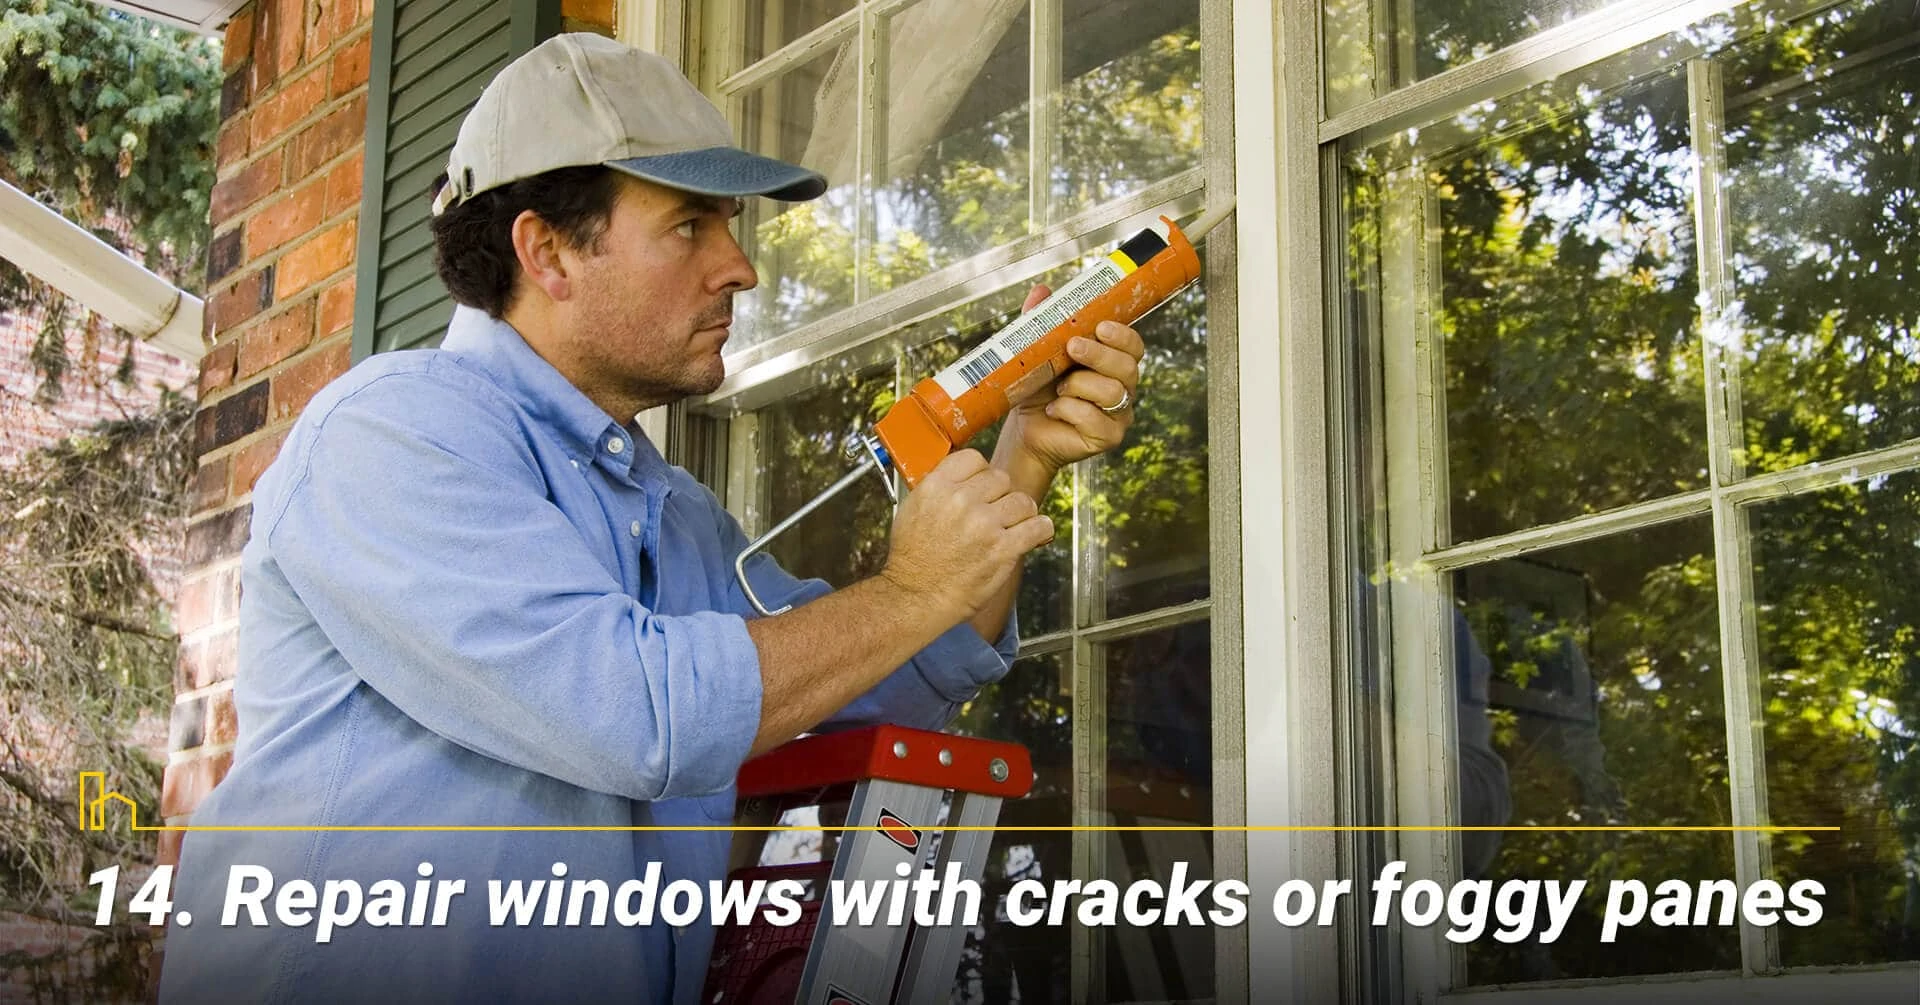 Repair windows with cracks or foggy panes, maintain windows